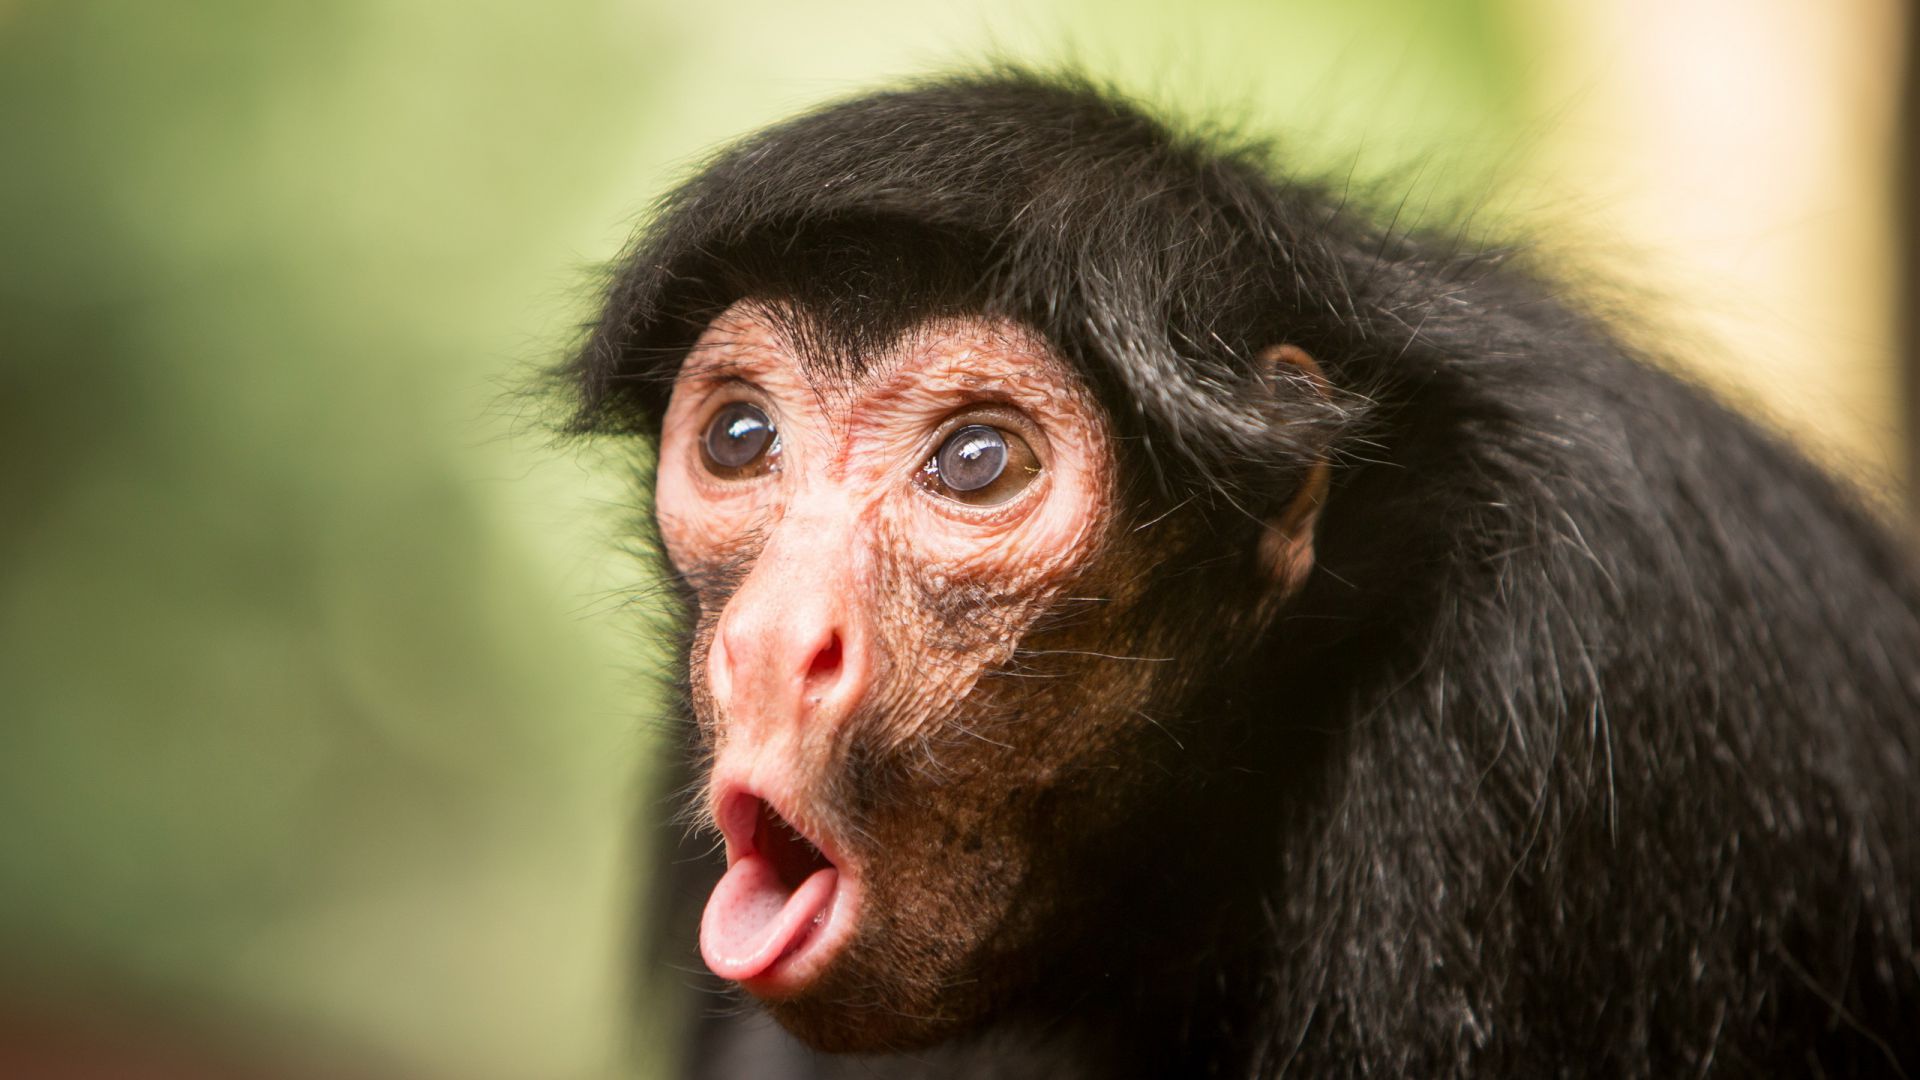 Шимпанзе, обезьяна, милые животные, забавный, Chimpanzee, monkey, cute animals, funny (horizontal)